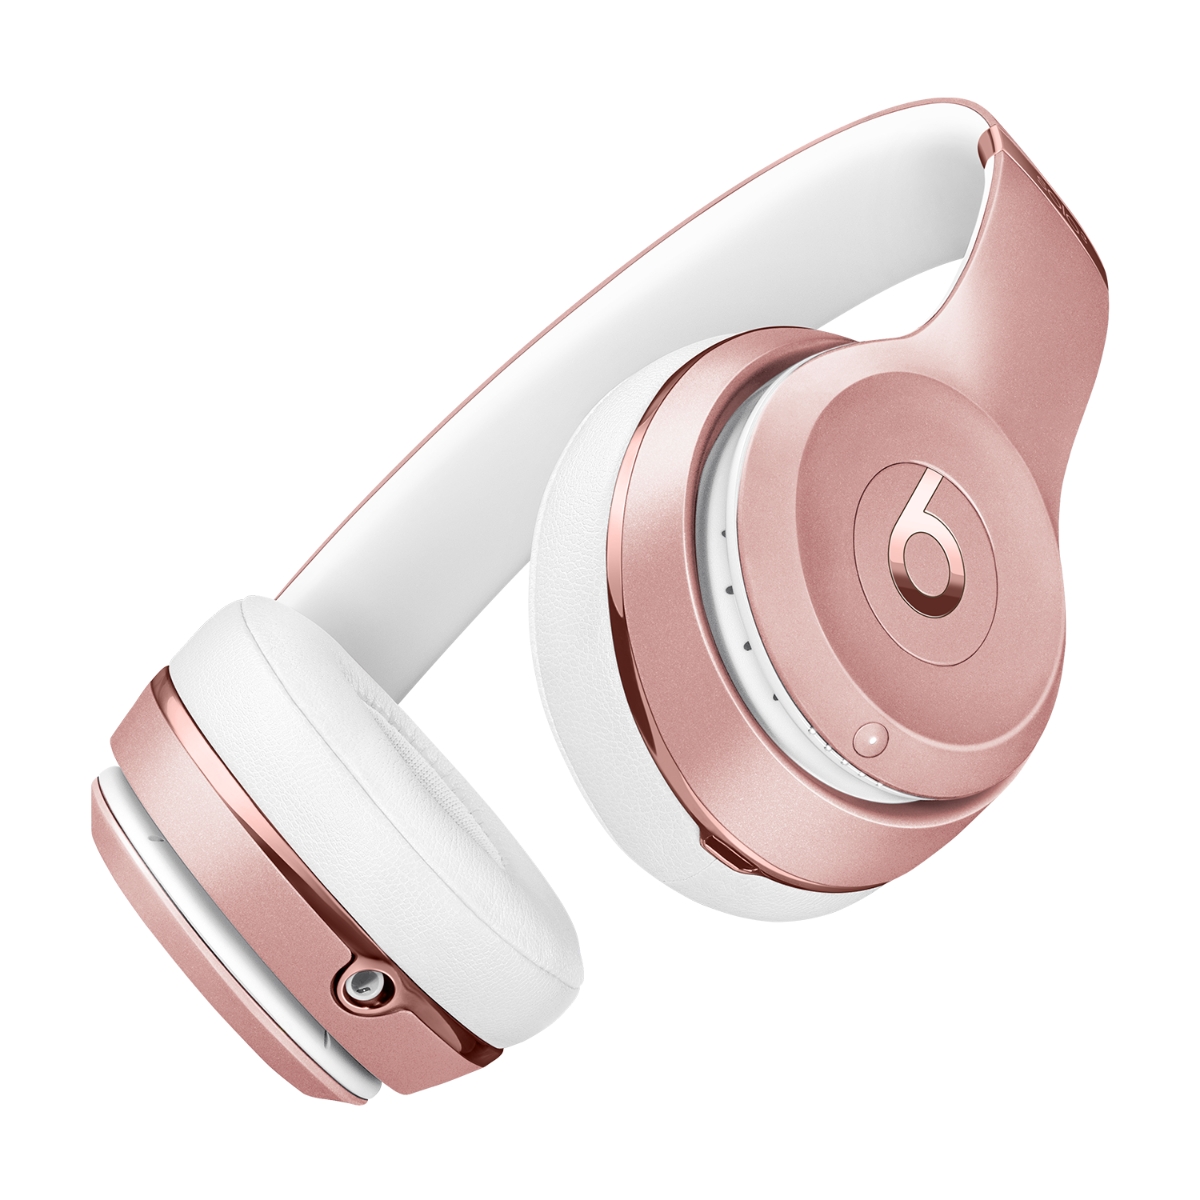 Solo³ Wireless Everyday On-Ear Headphones - Beats Rose Gold